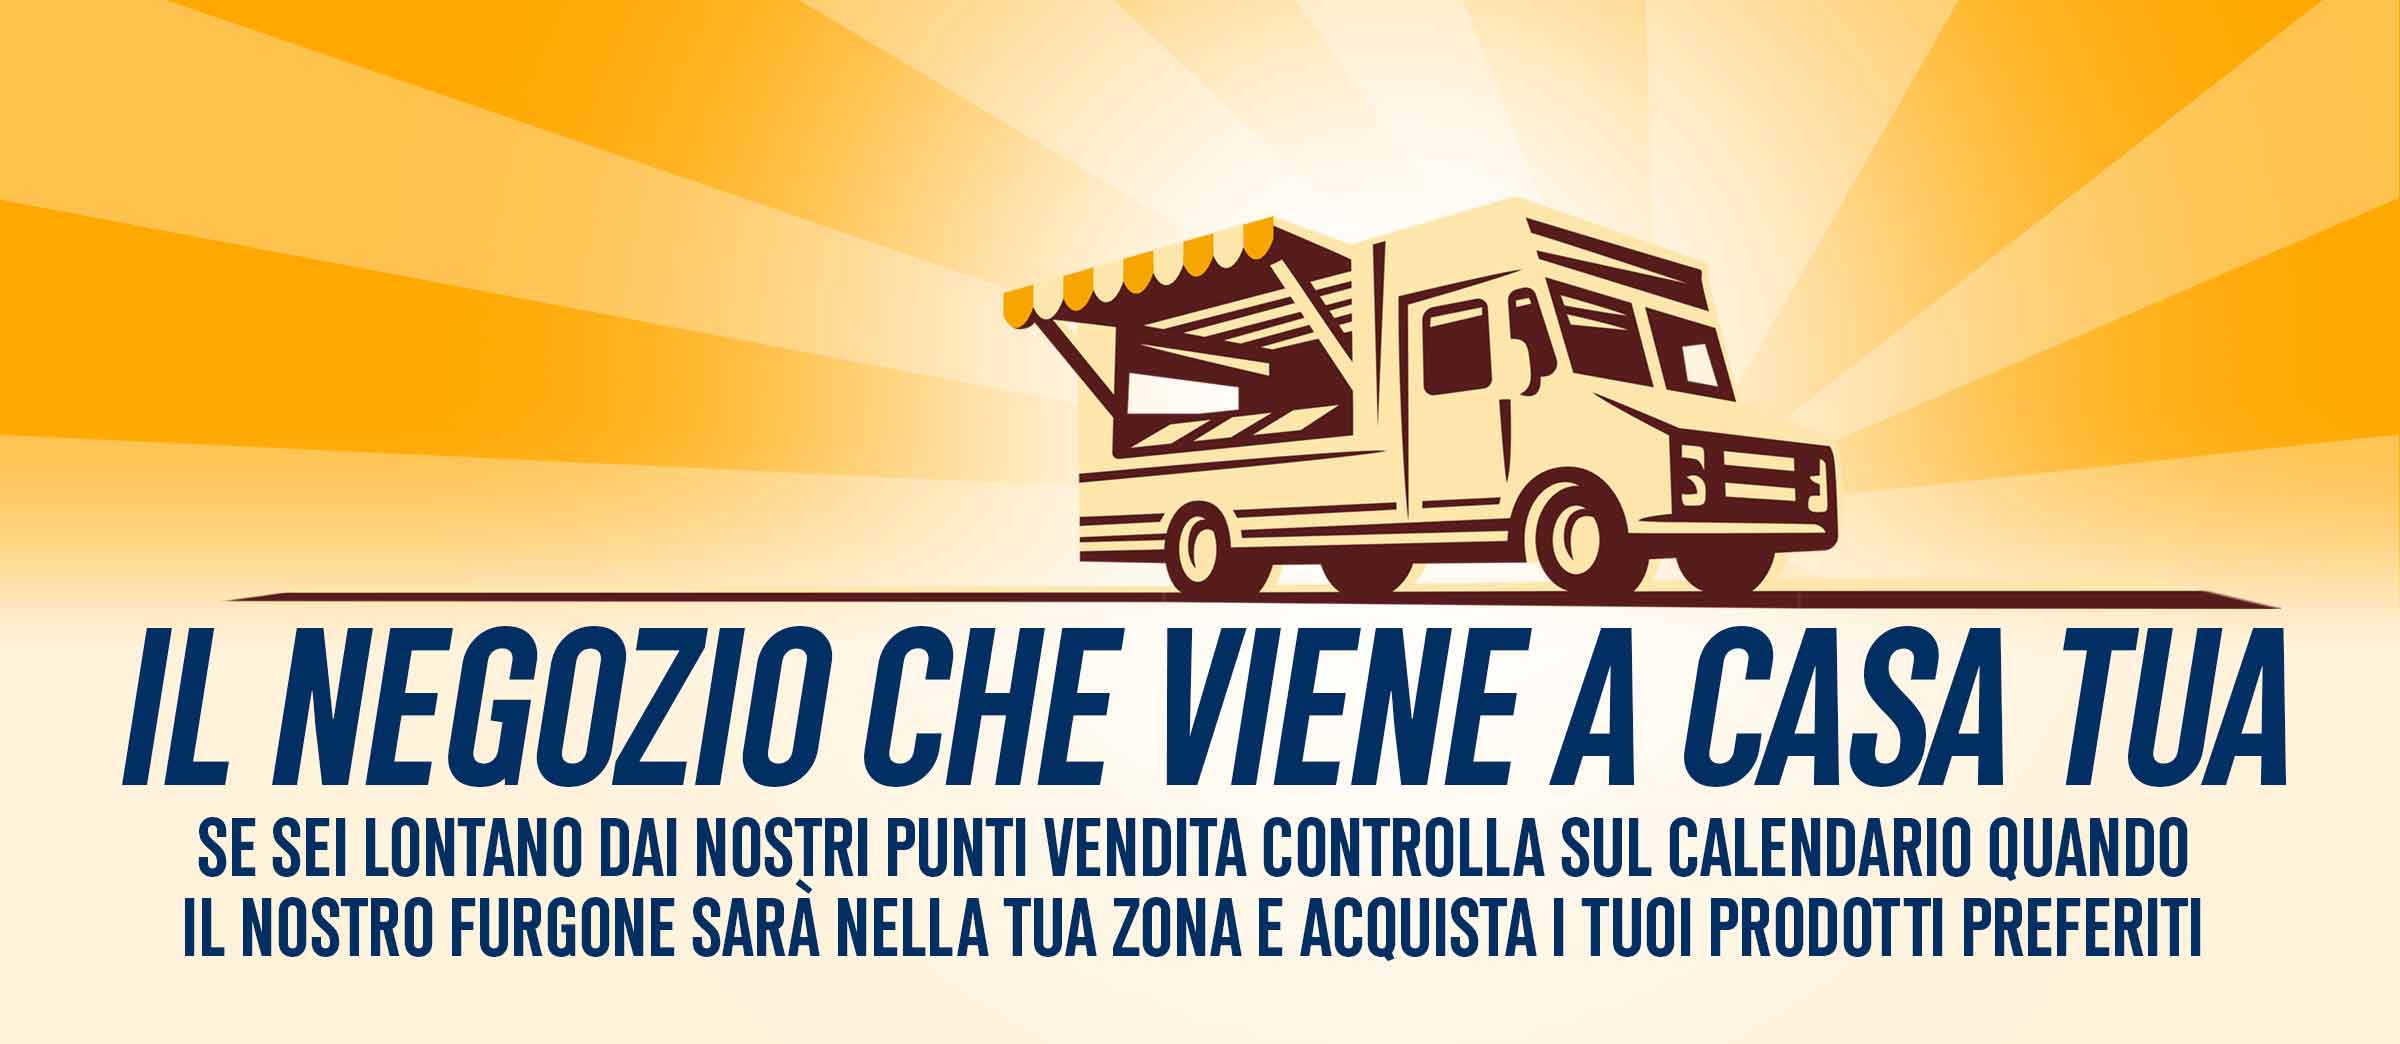 Food-Truck-Life-120-Lo-Spaccio-Slider-1200x522